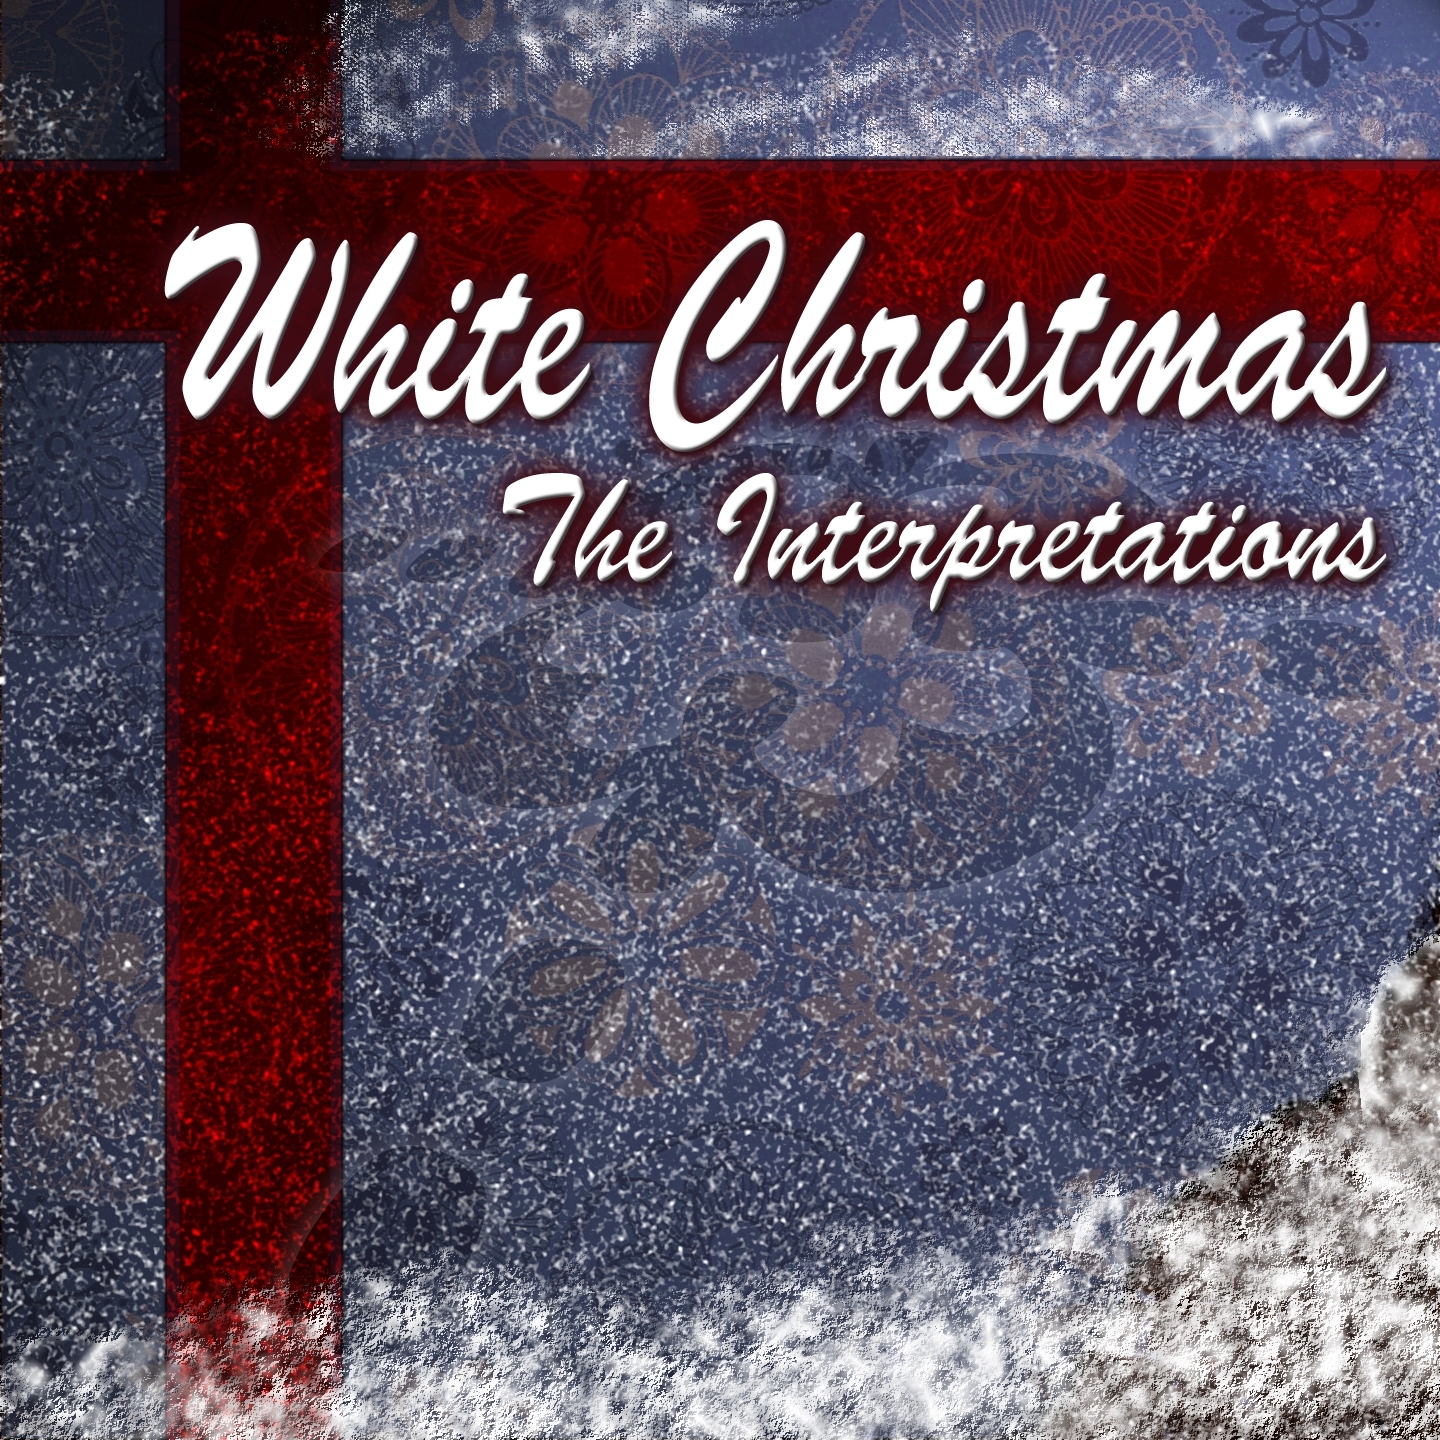 White Christmas (The Interpretations)